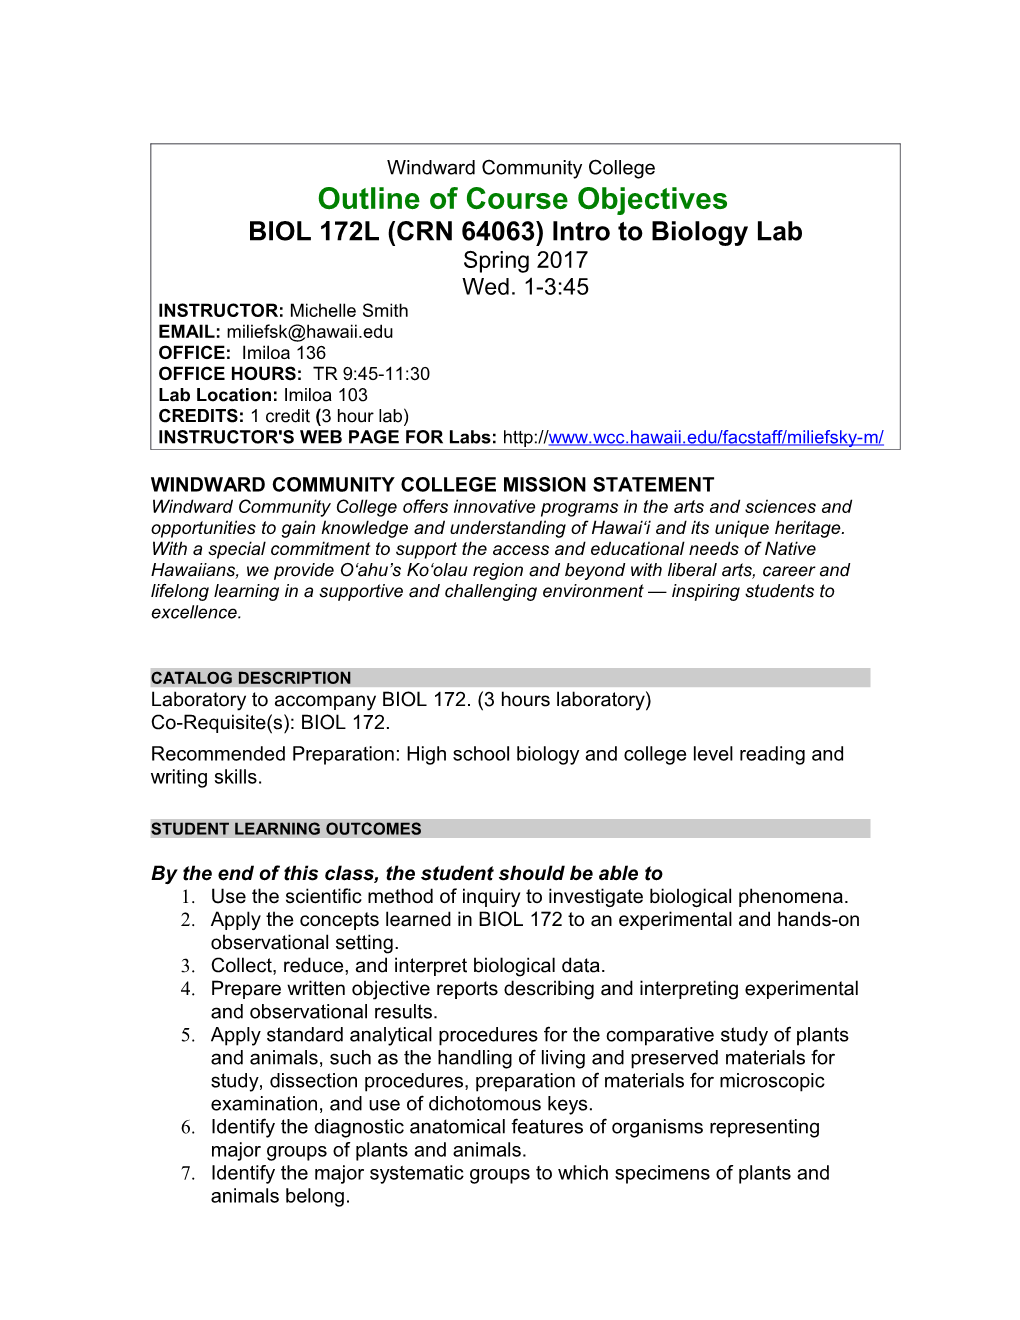 BIOL 172L (CRN 64063) Intro to Biology Lab